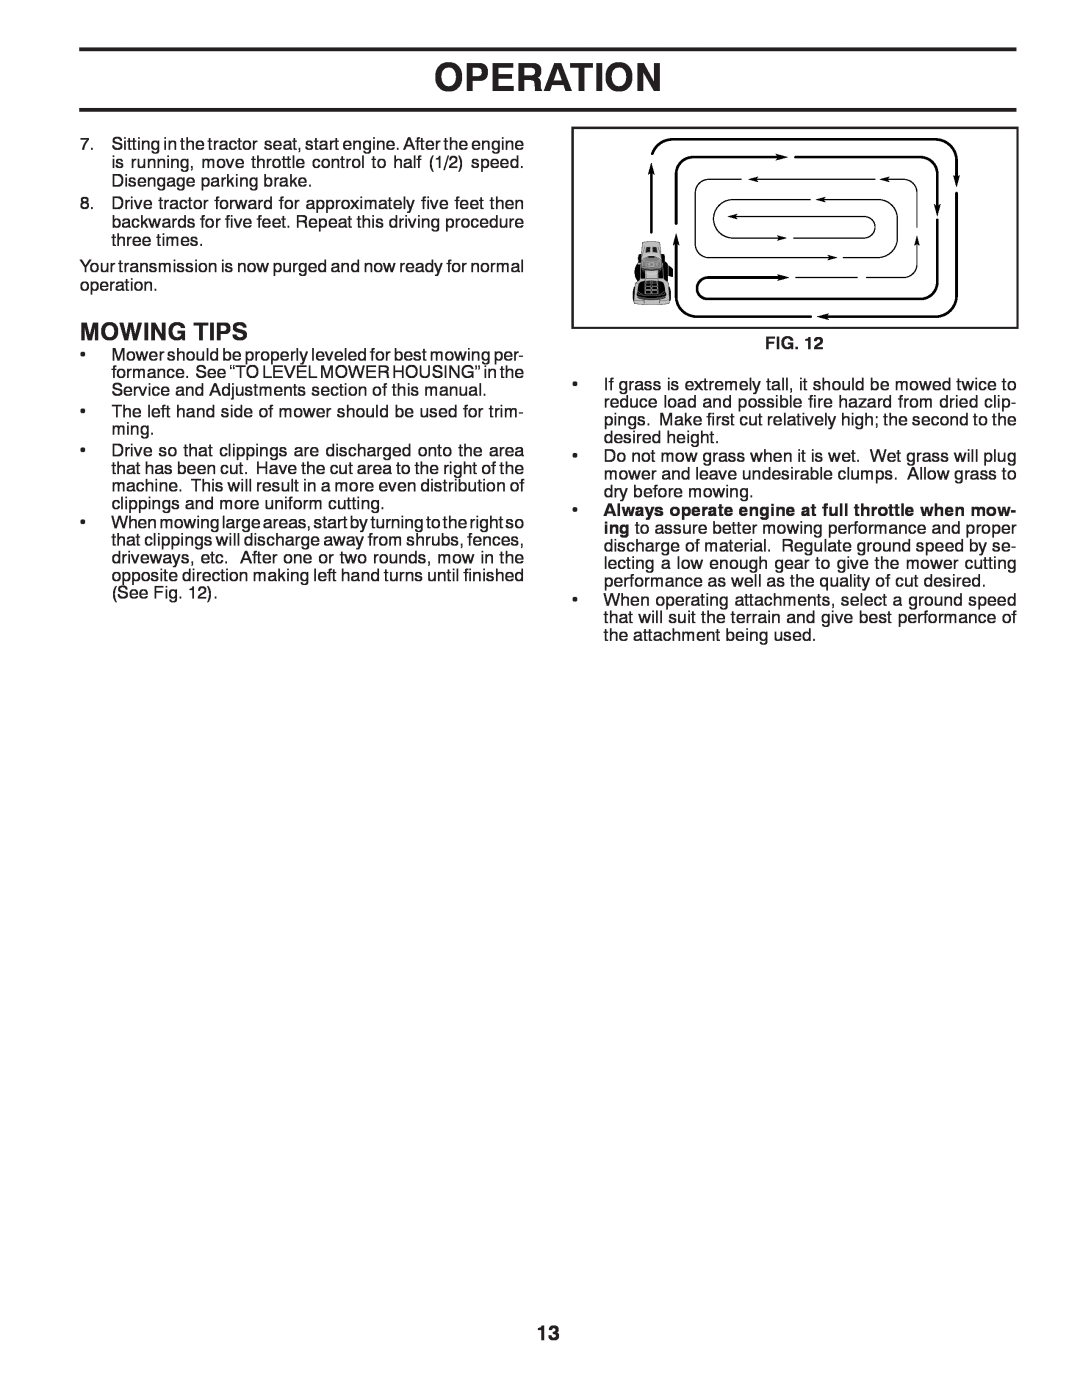 Poulan 412412 manual Mowing Tips, Operation 